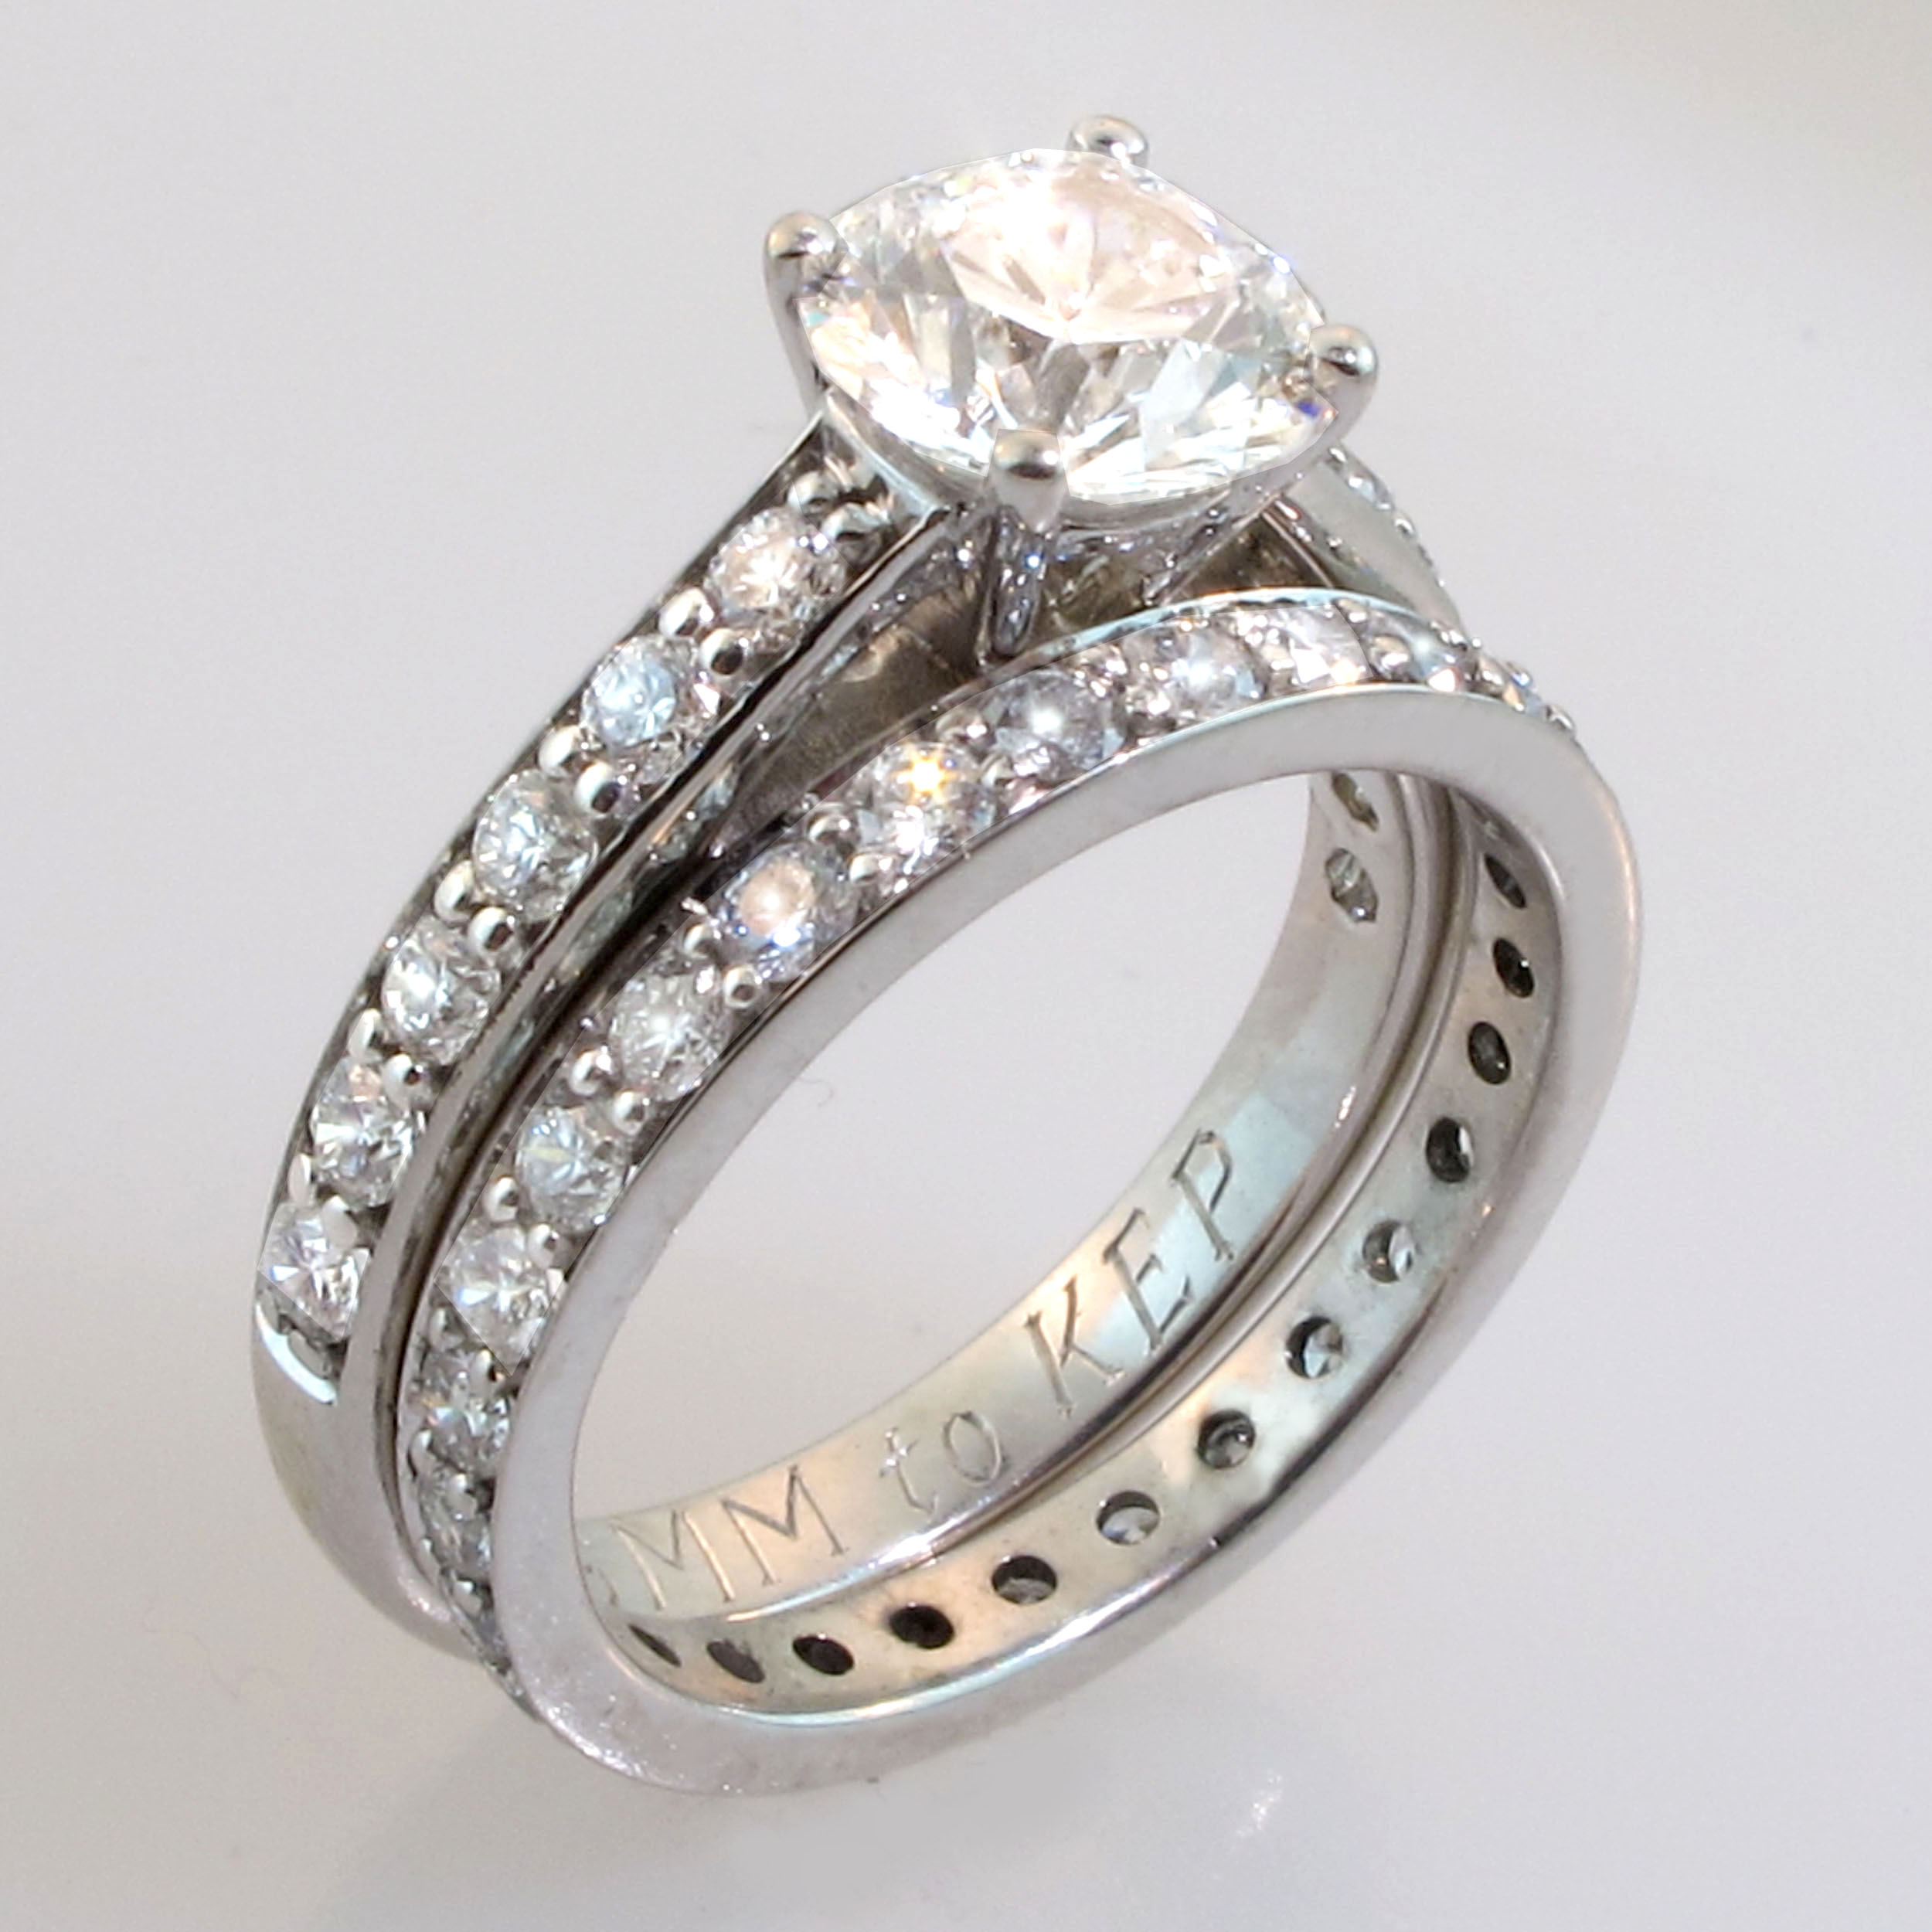 Engagement ring with matching wedding band wedding ring 4-prong center diamond pavee setting